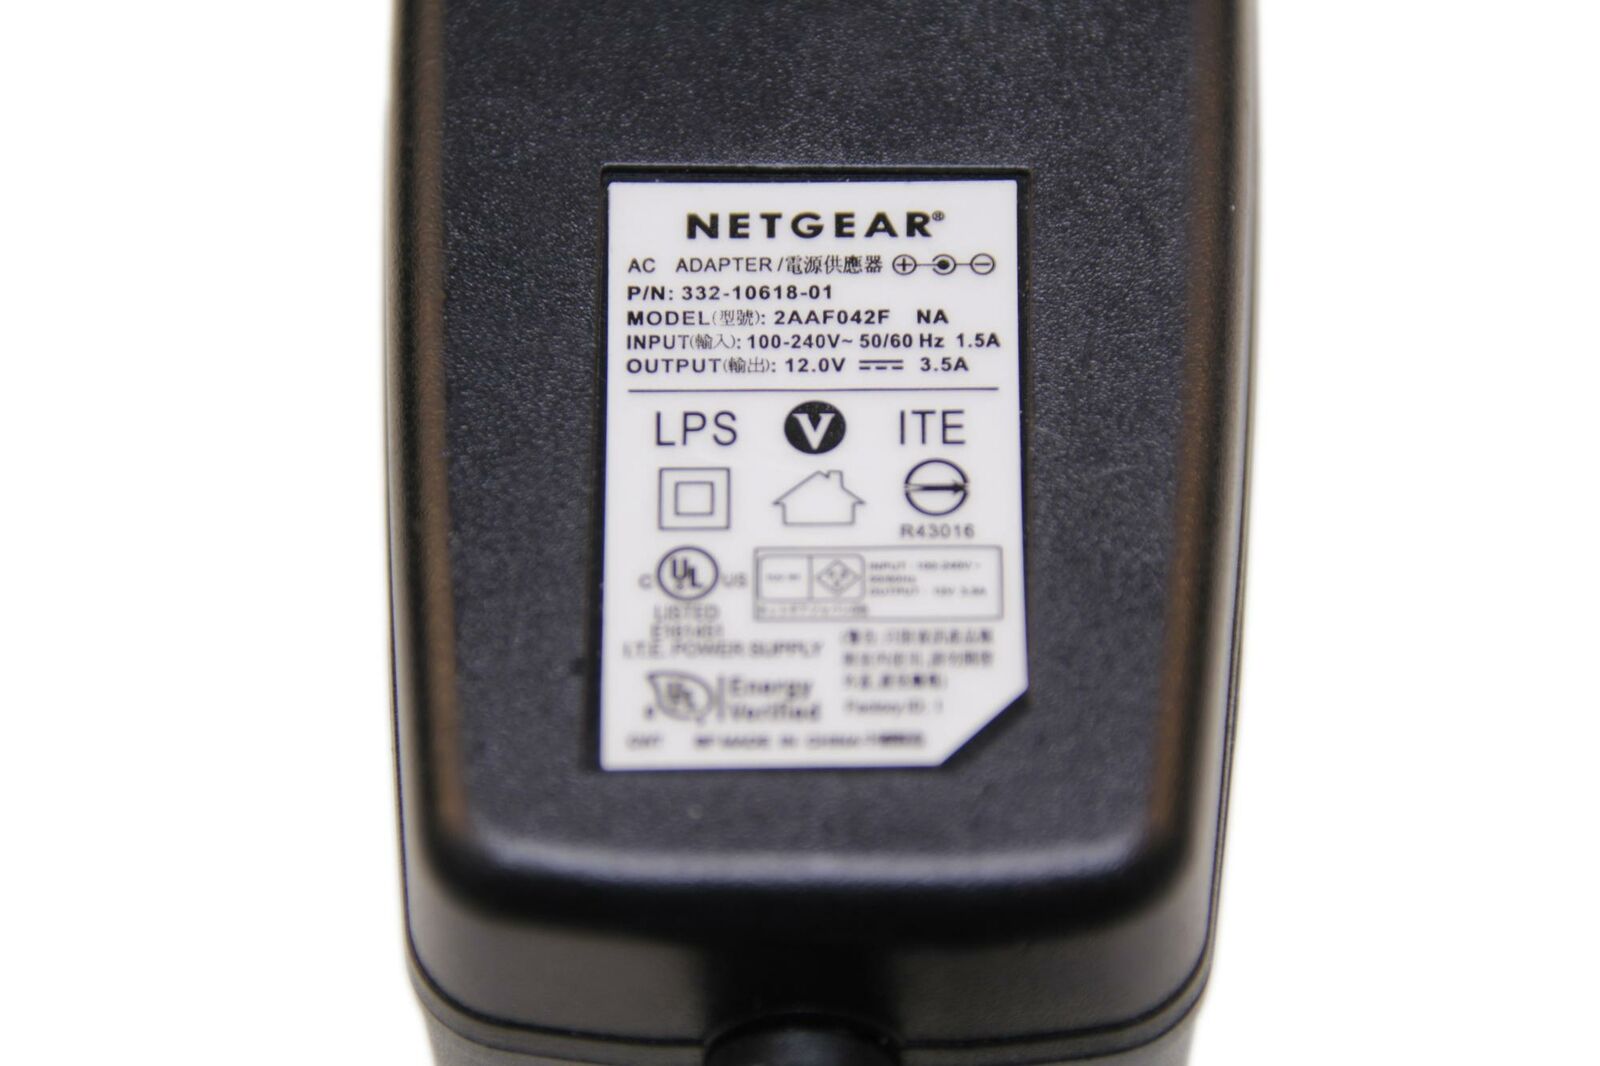 Genuine Netgear Nighthawk Pro Gaming Router ( XR450 ) AC Adapter Brand: Netgear